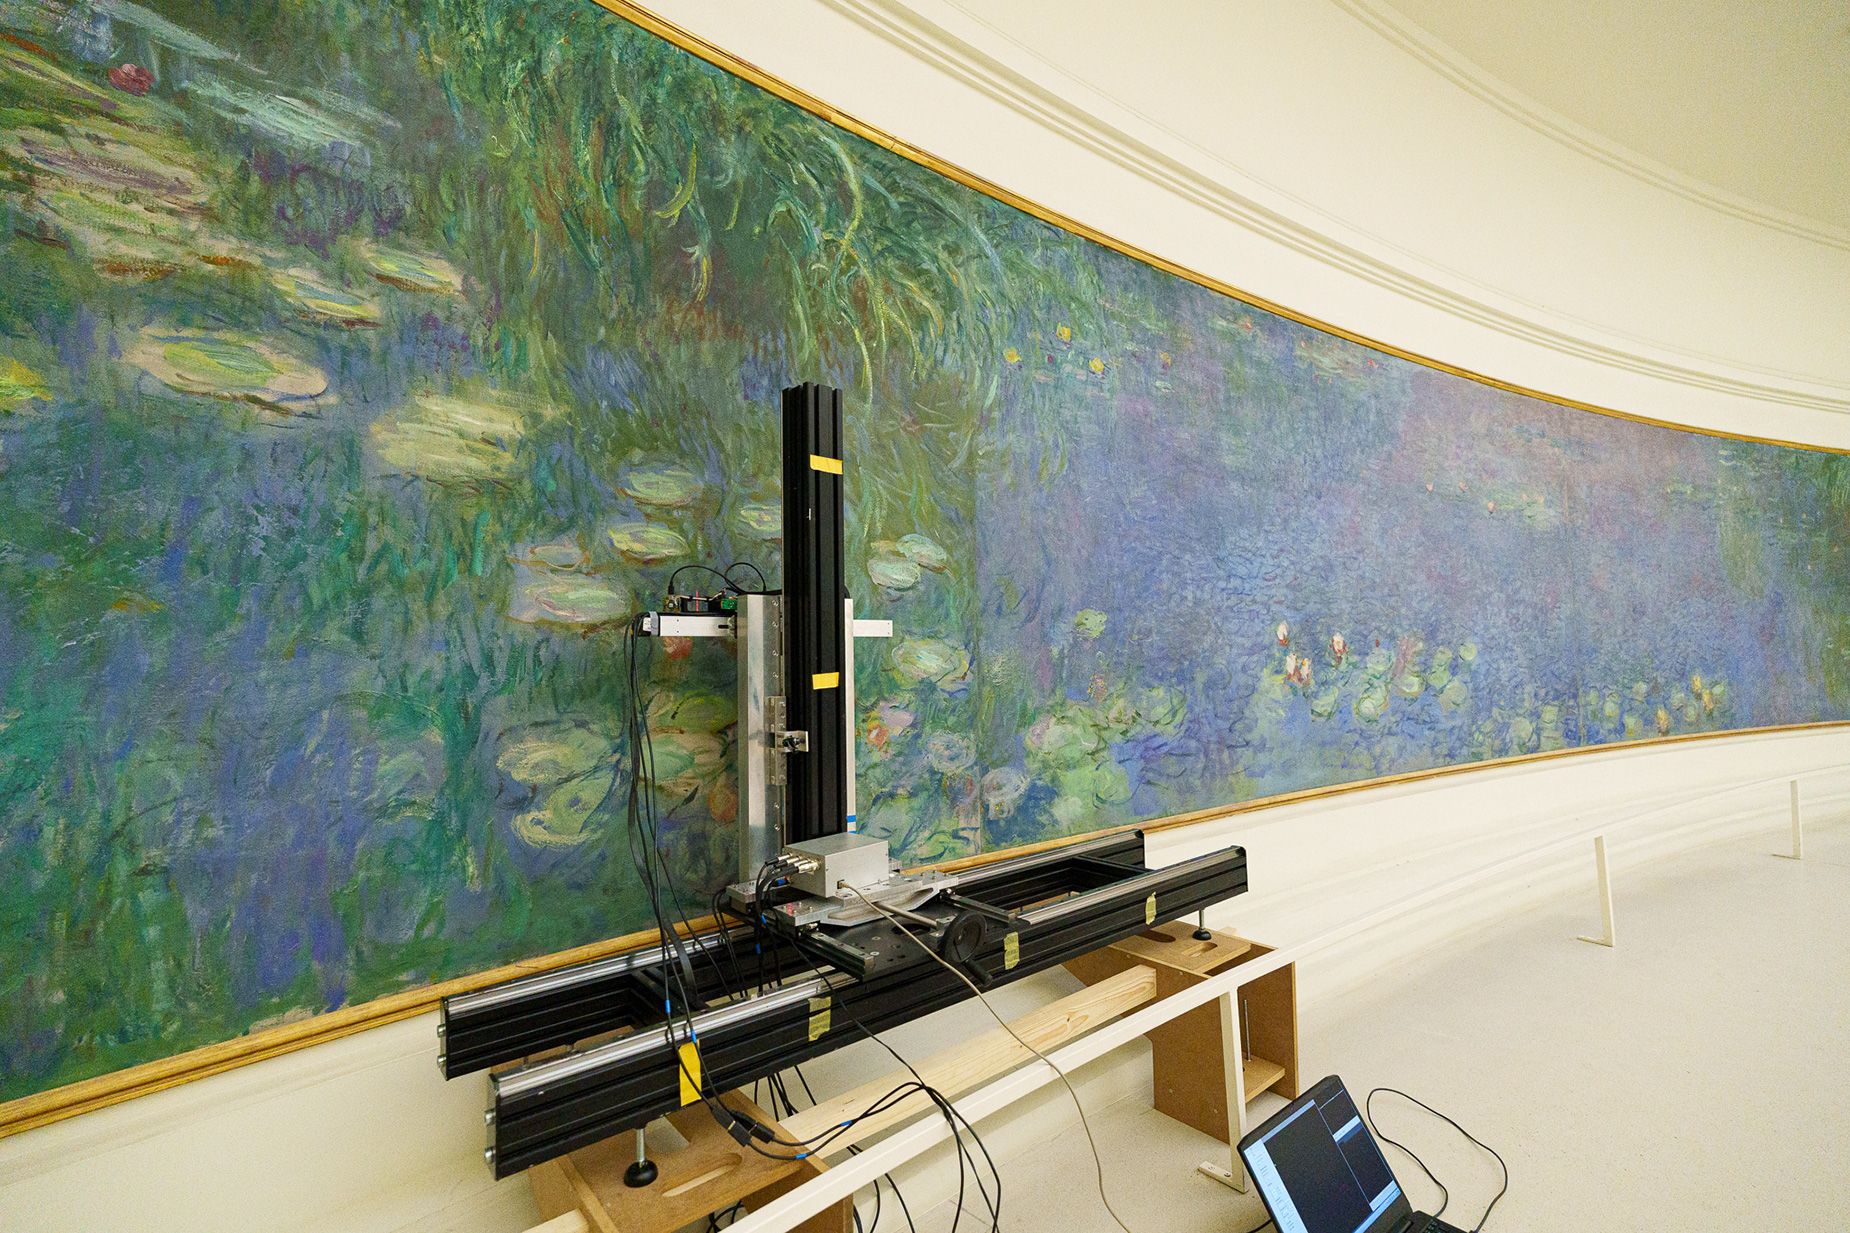 The Austrian company spent a week scanning Claude Monet's "Water Liliies" murals at the Musée de l'Orangerie in Paris.